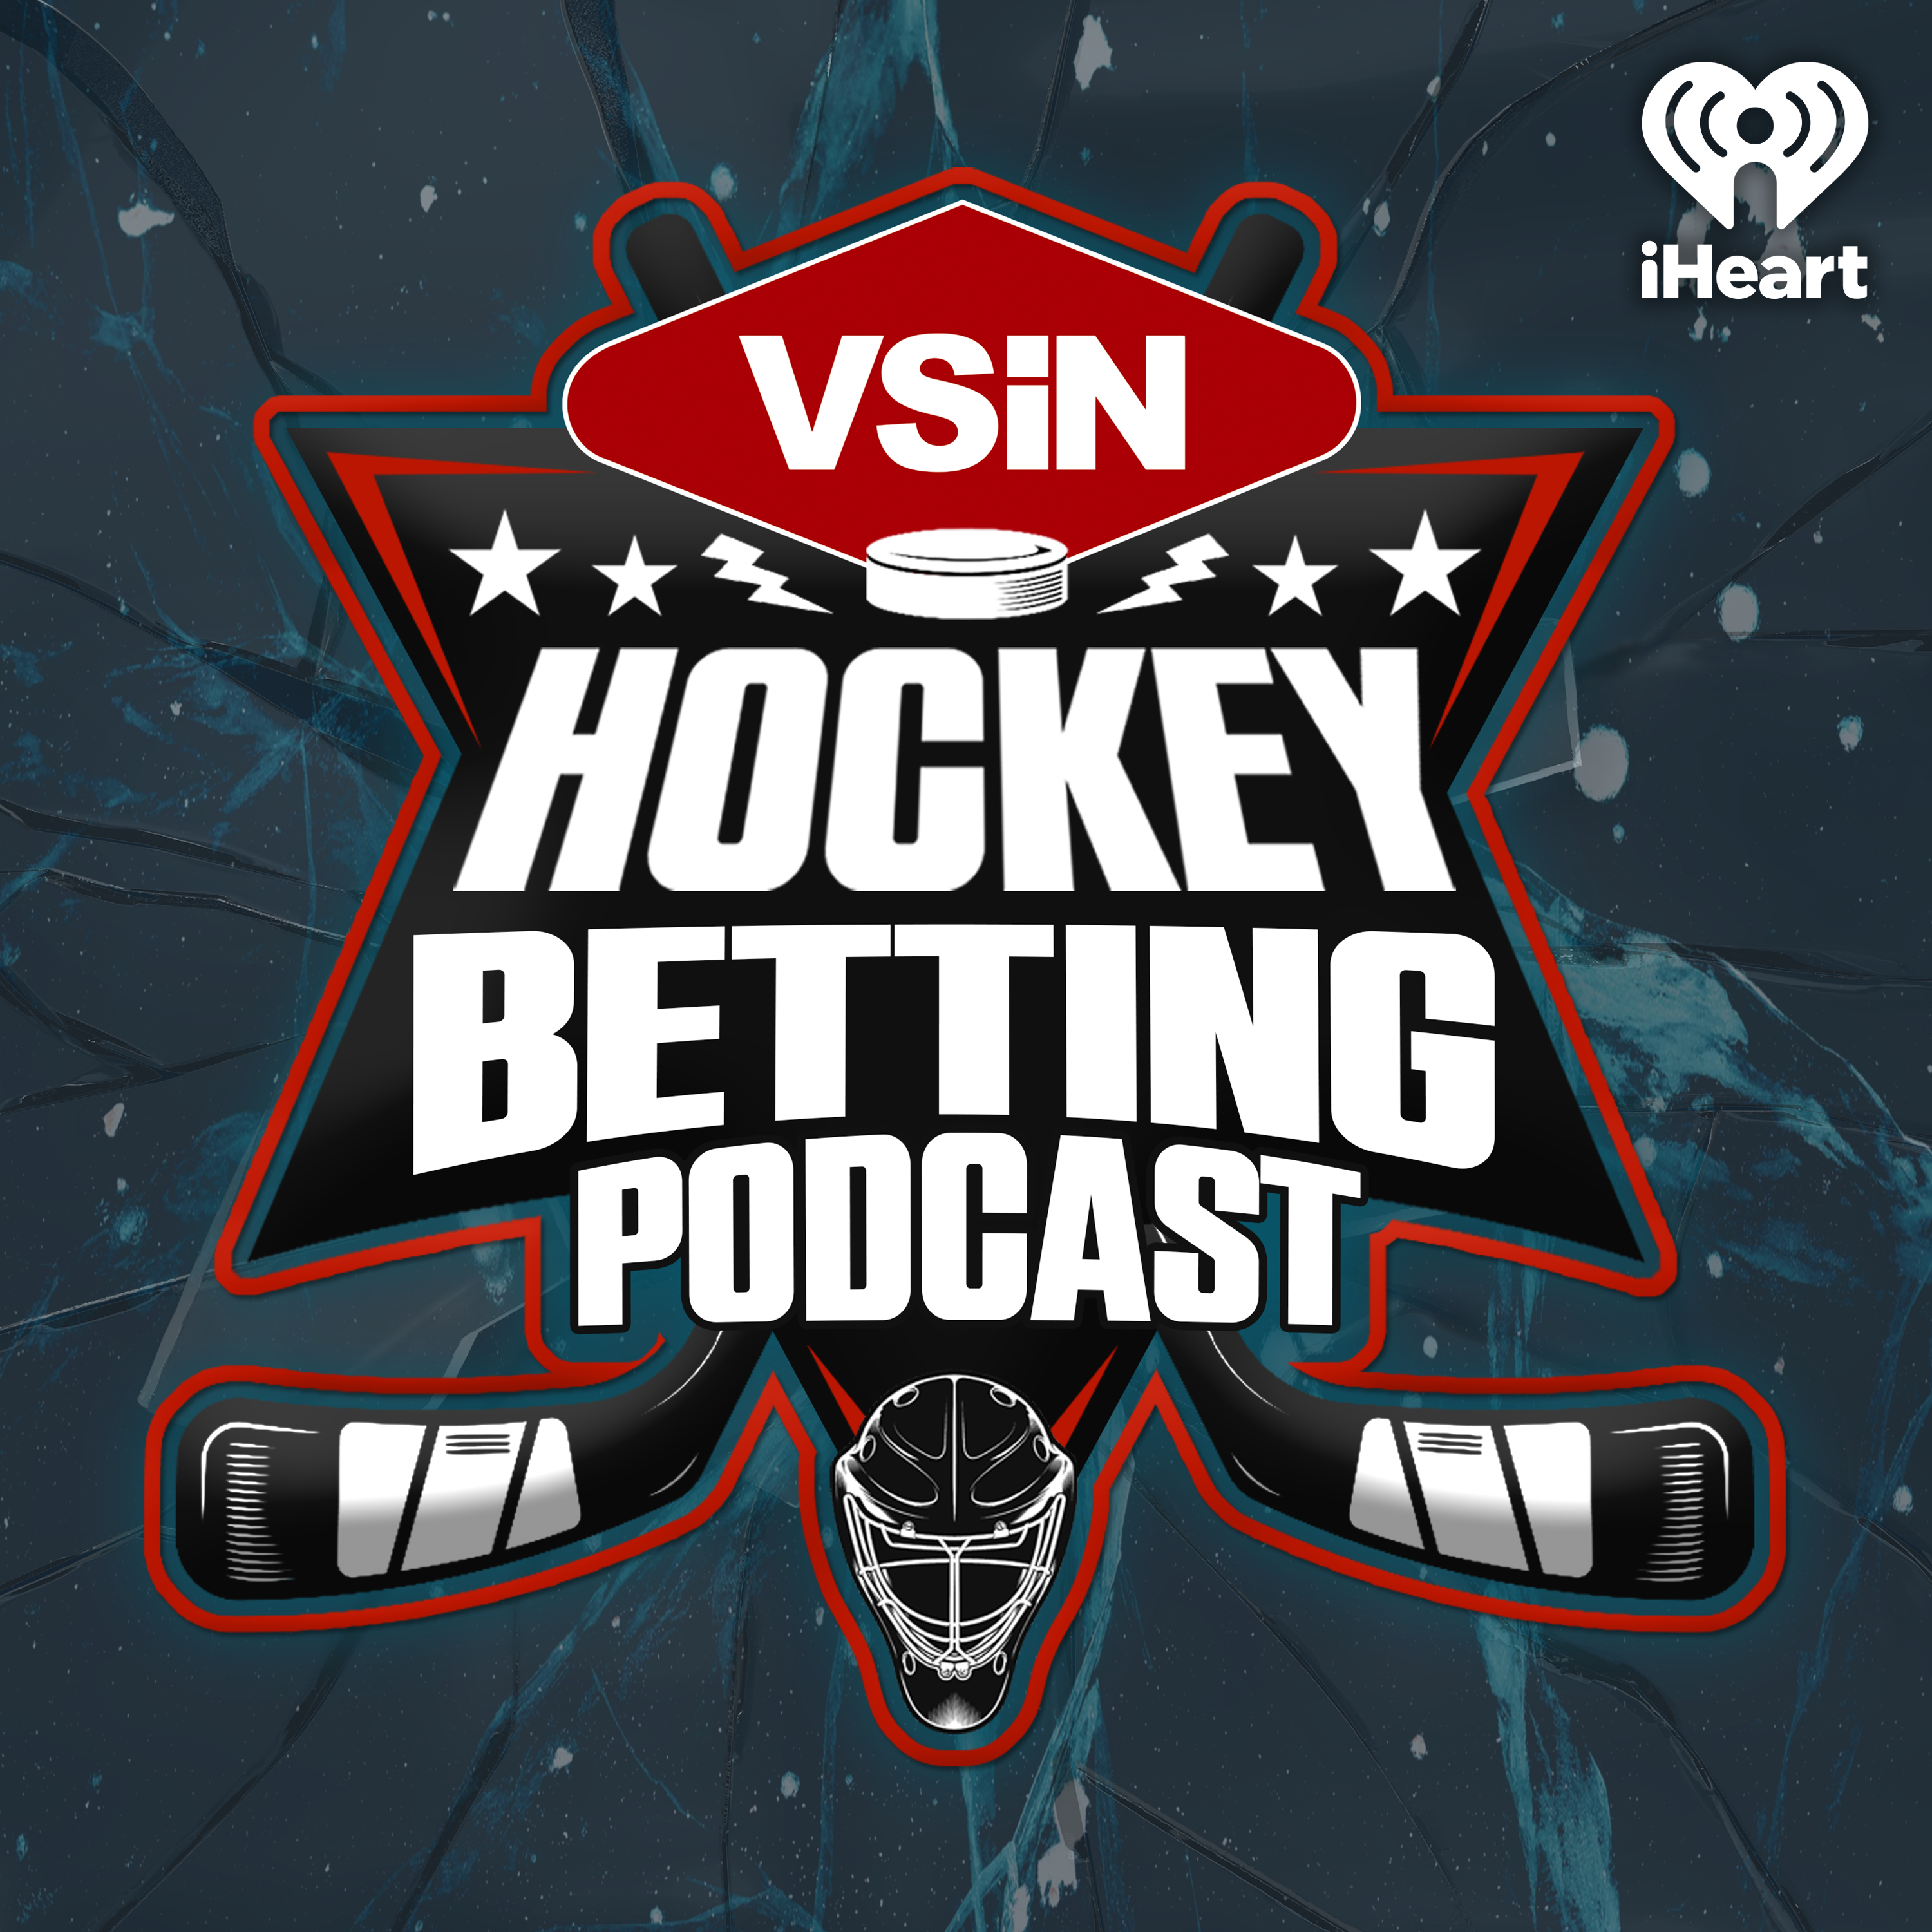 VSiN Hockey Betting Podcast